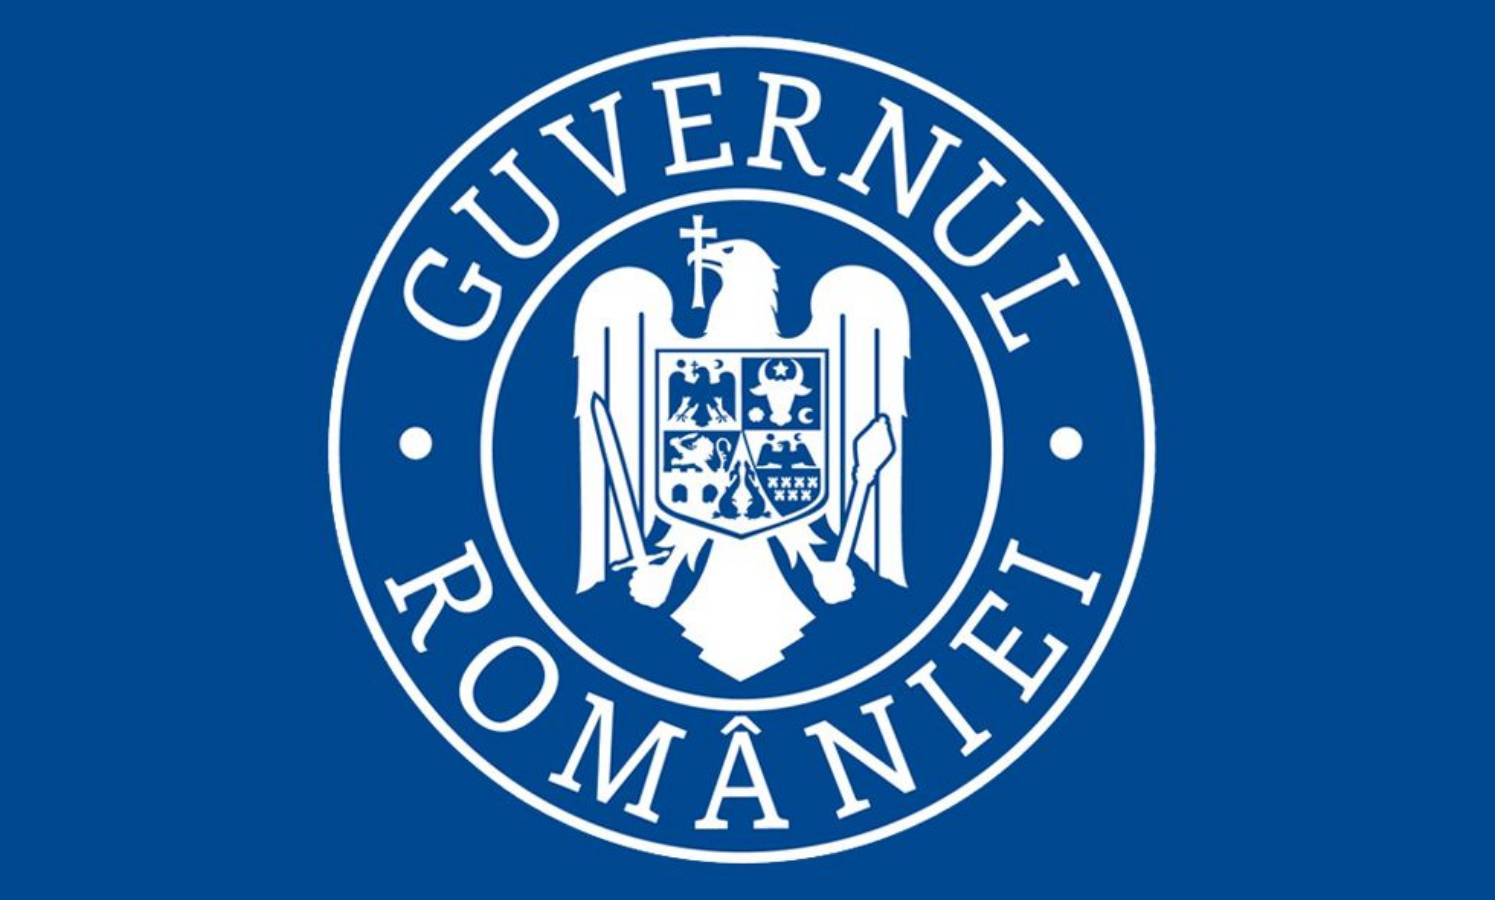 Den rumænske regering undgår feriekontakter